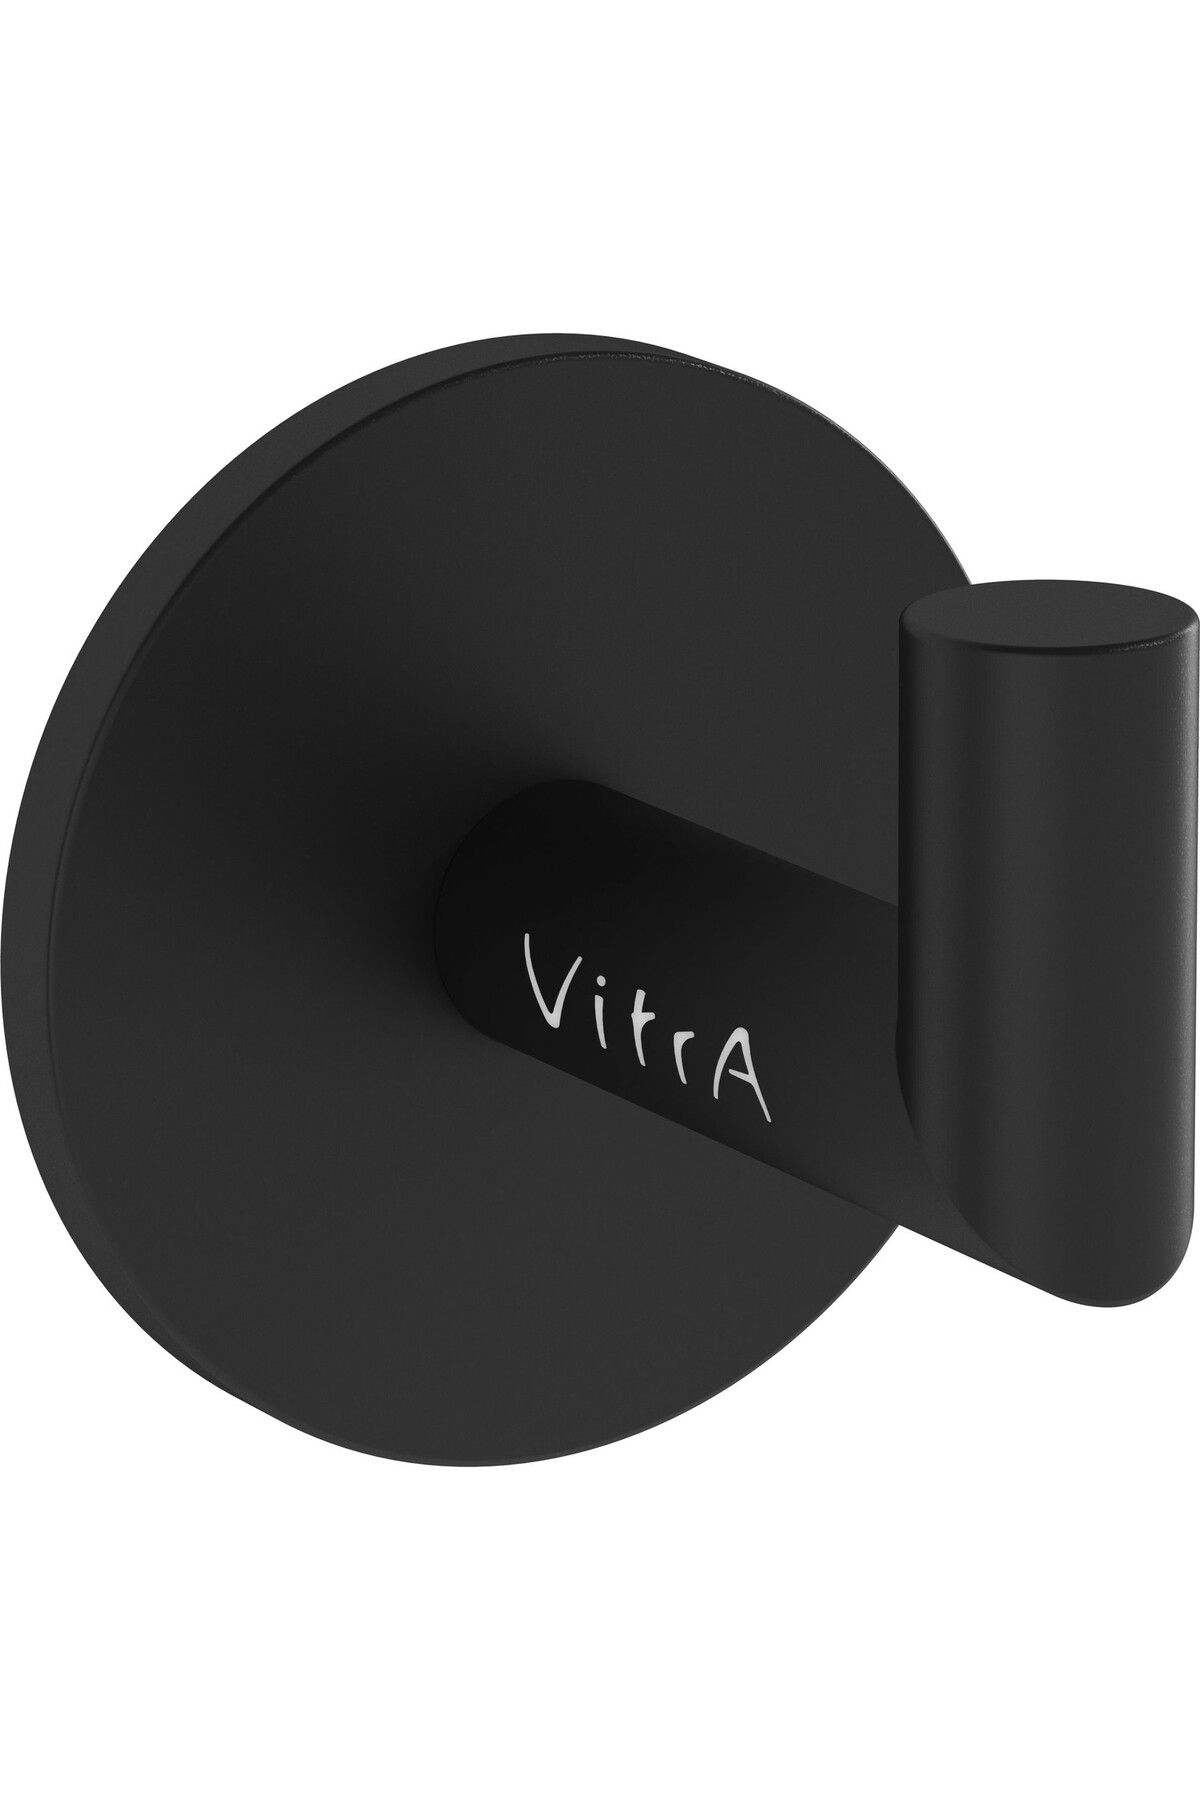 VitrA Origin A4488436 Tekli Askı, Mat Siyah